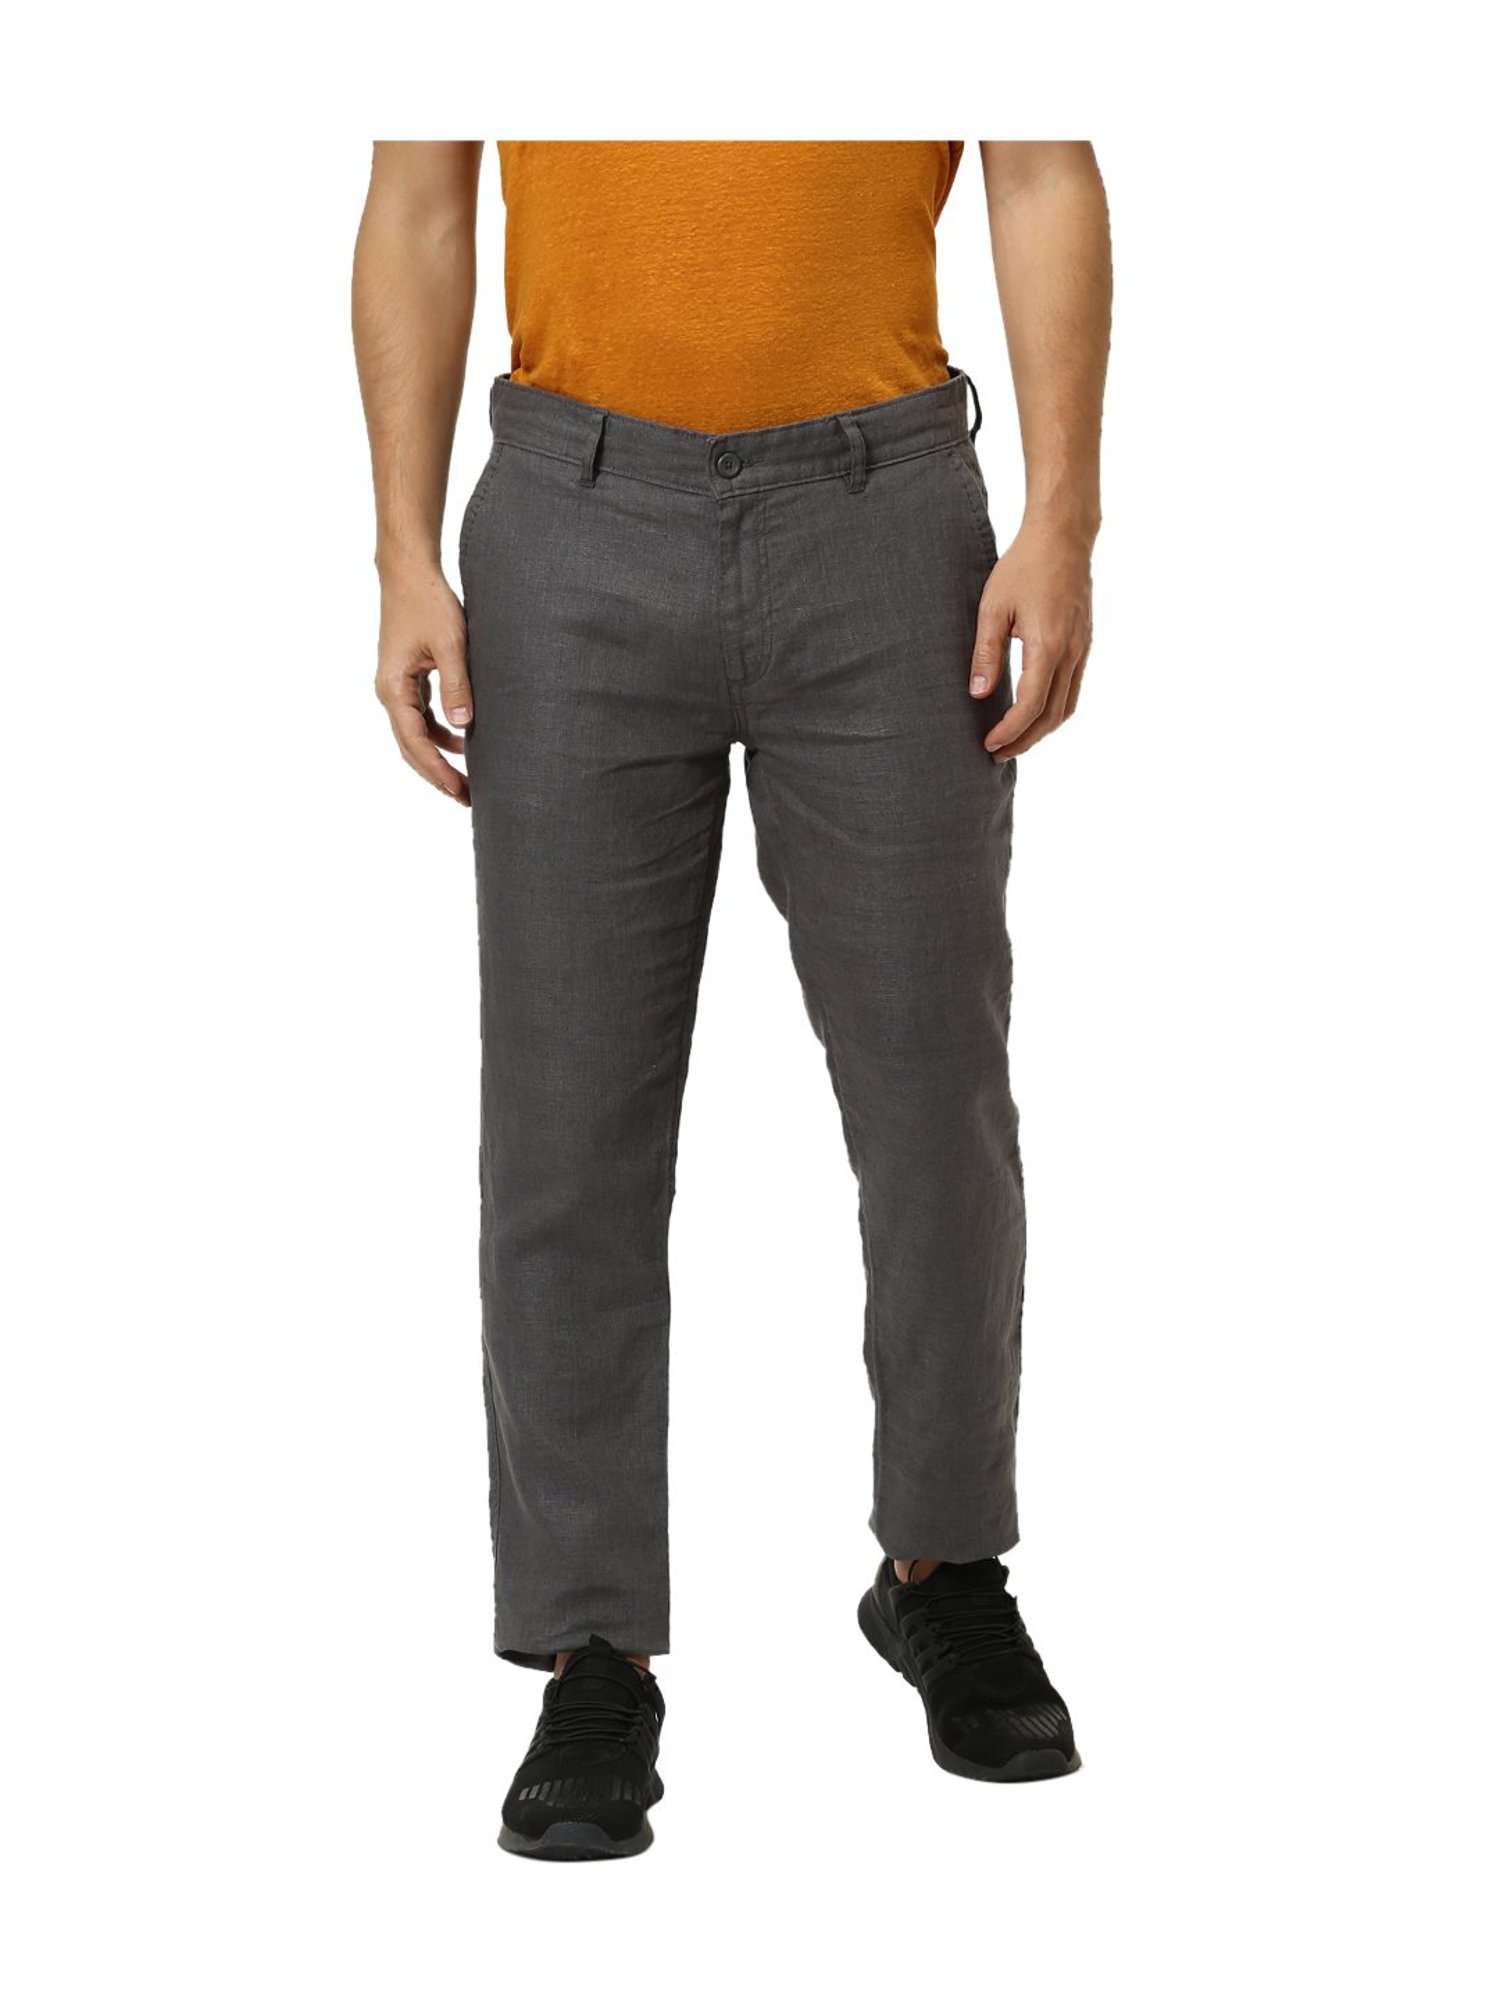 Plain Mens Brown Linen Trousers Casual Wear Size 32